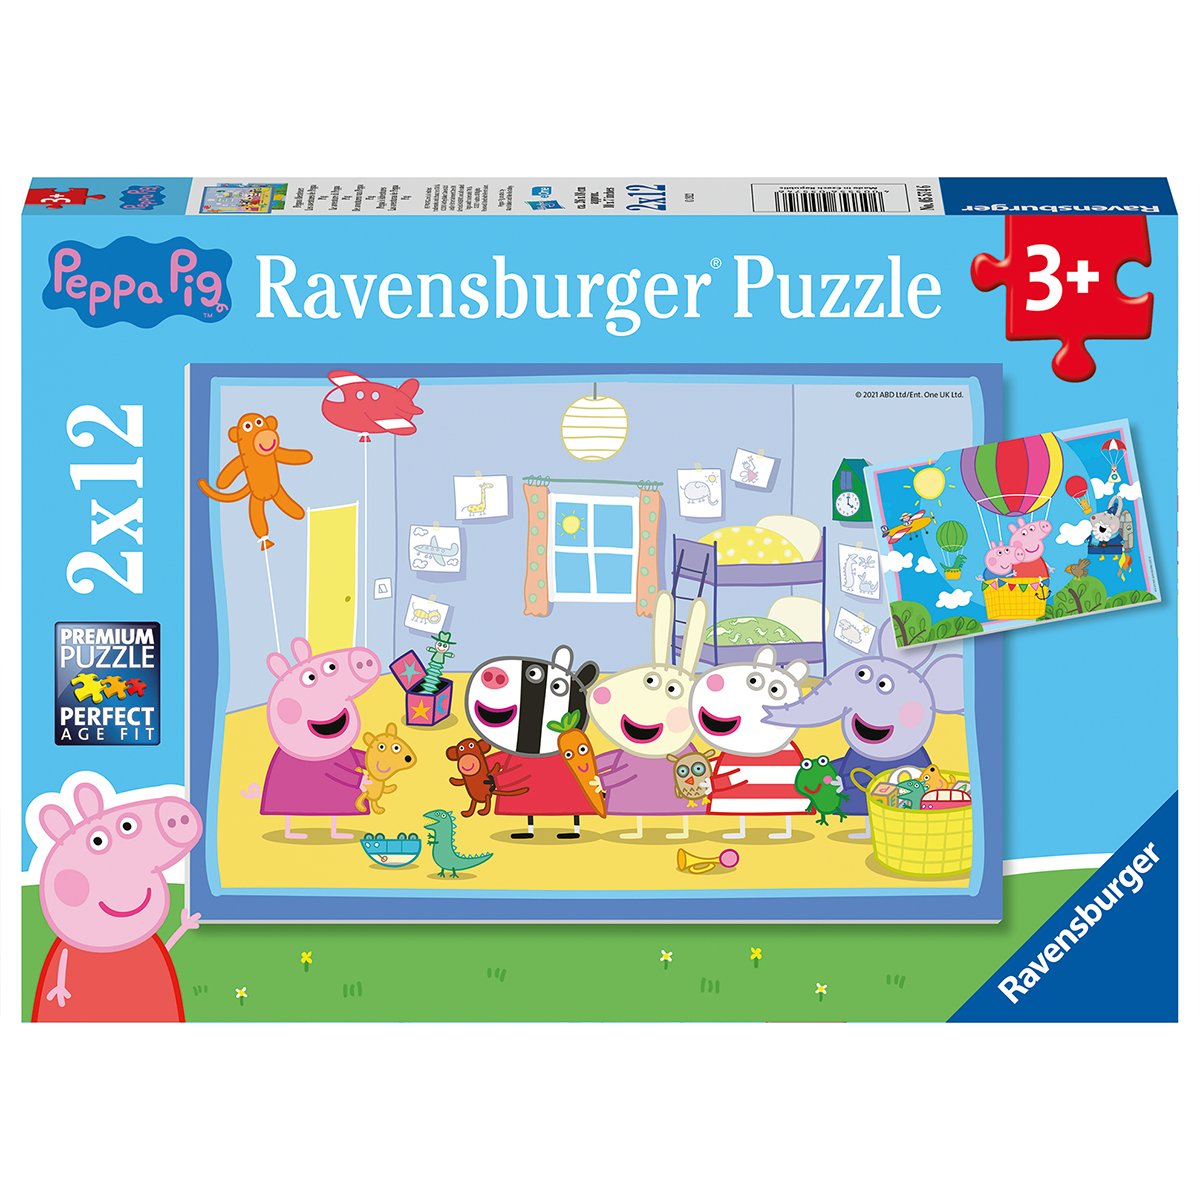 Ravensburger 2 puzzle 12 pezzi per bambini dai 3 anni - peppa pig - RAVENSBURGER